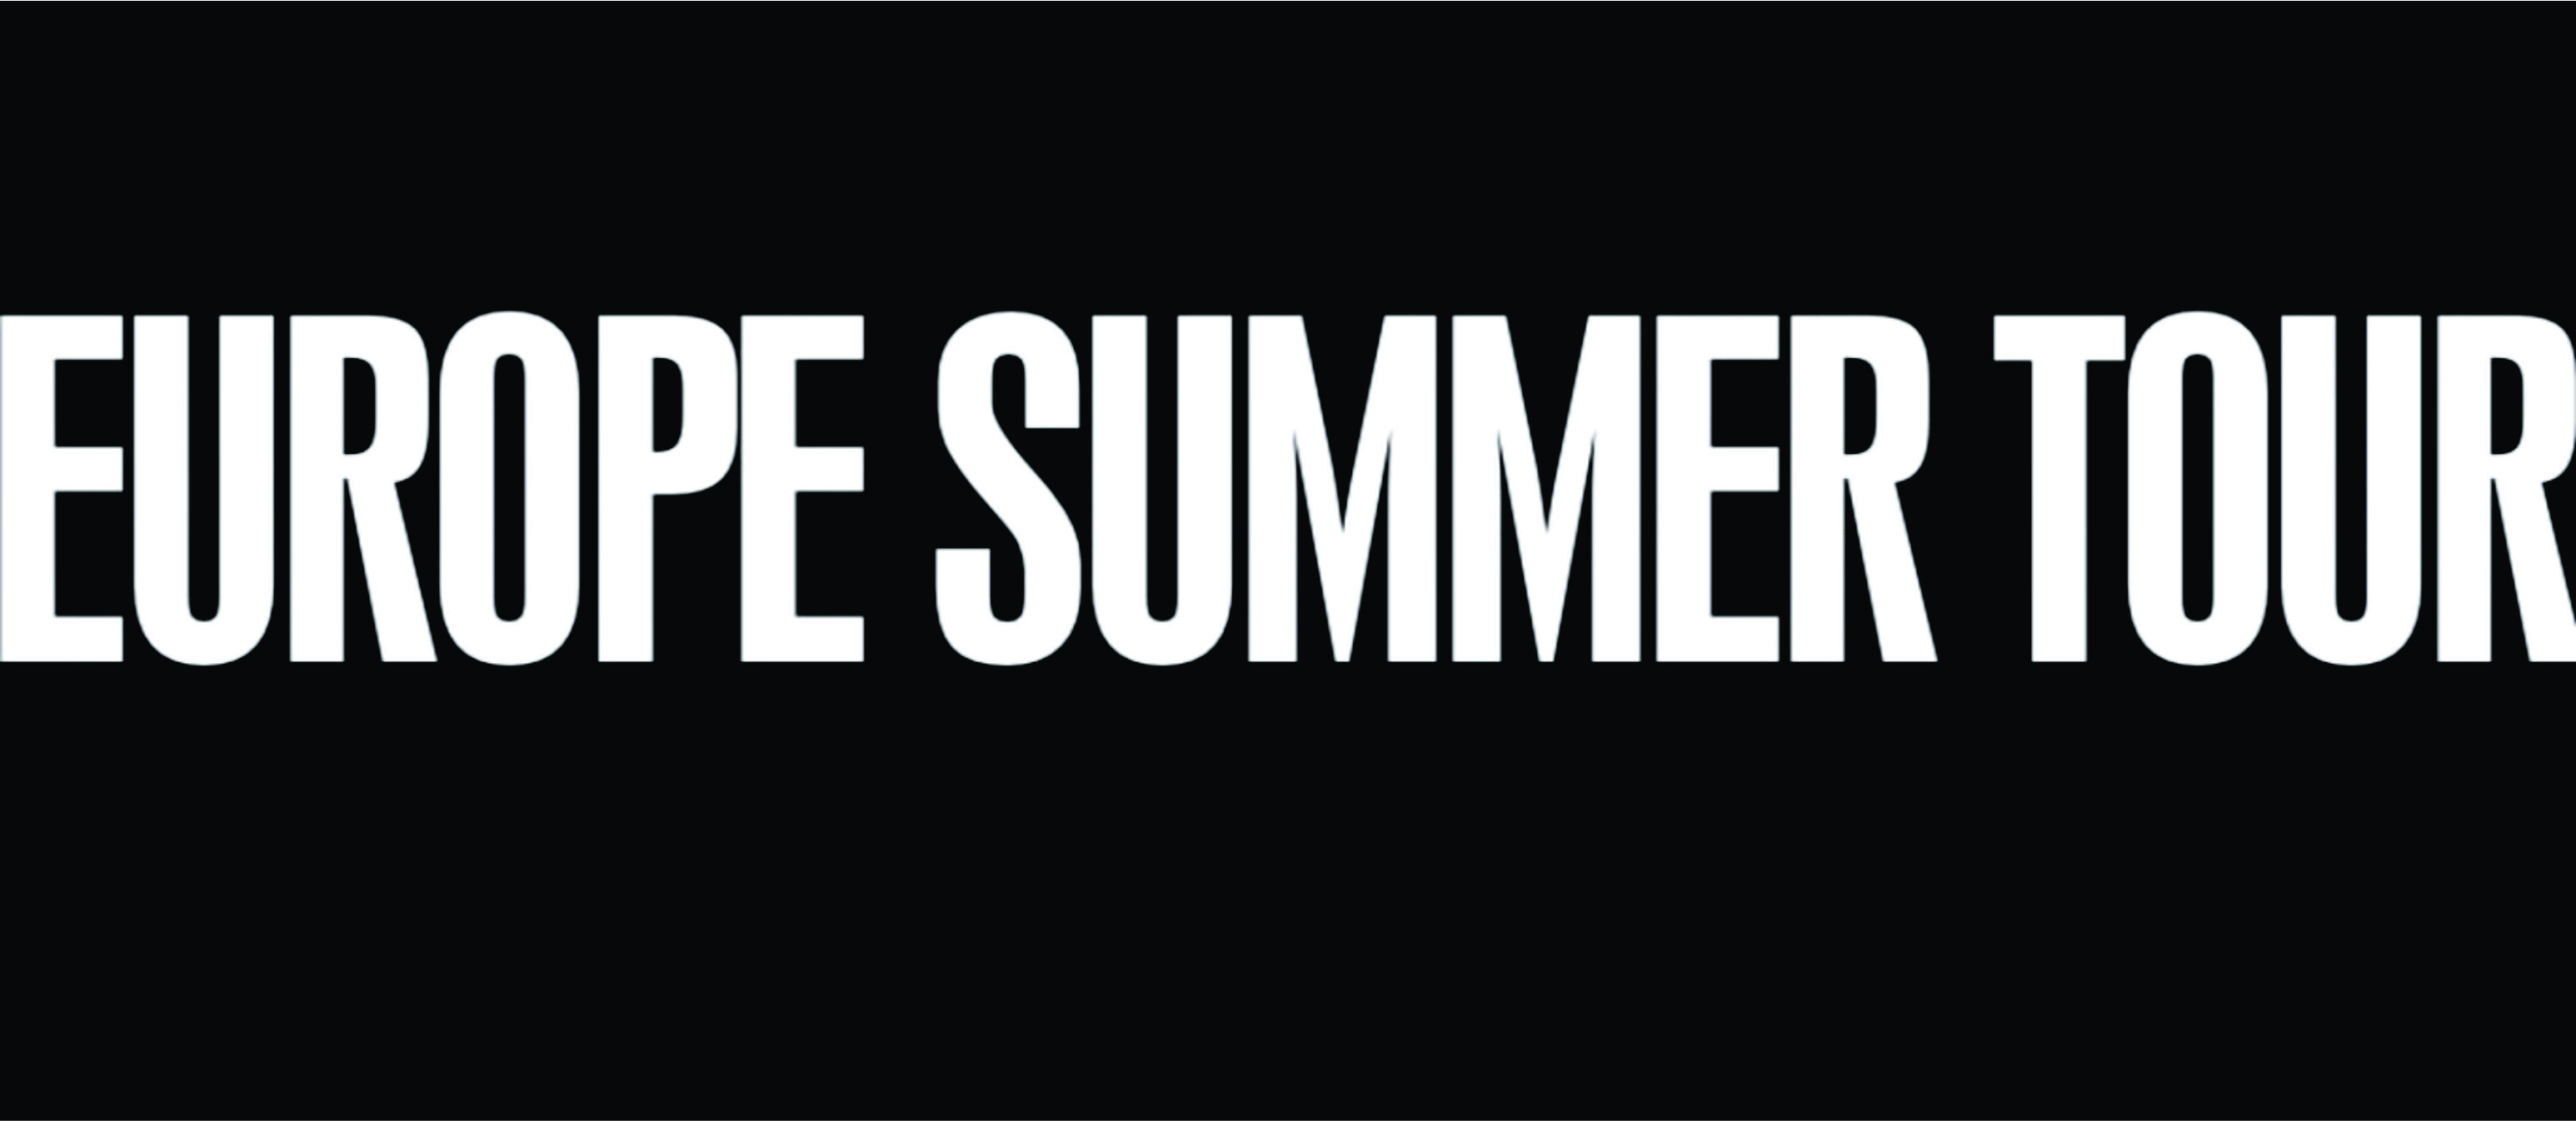 Volcom - Europe Summer Tour cover art